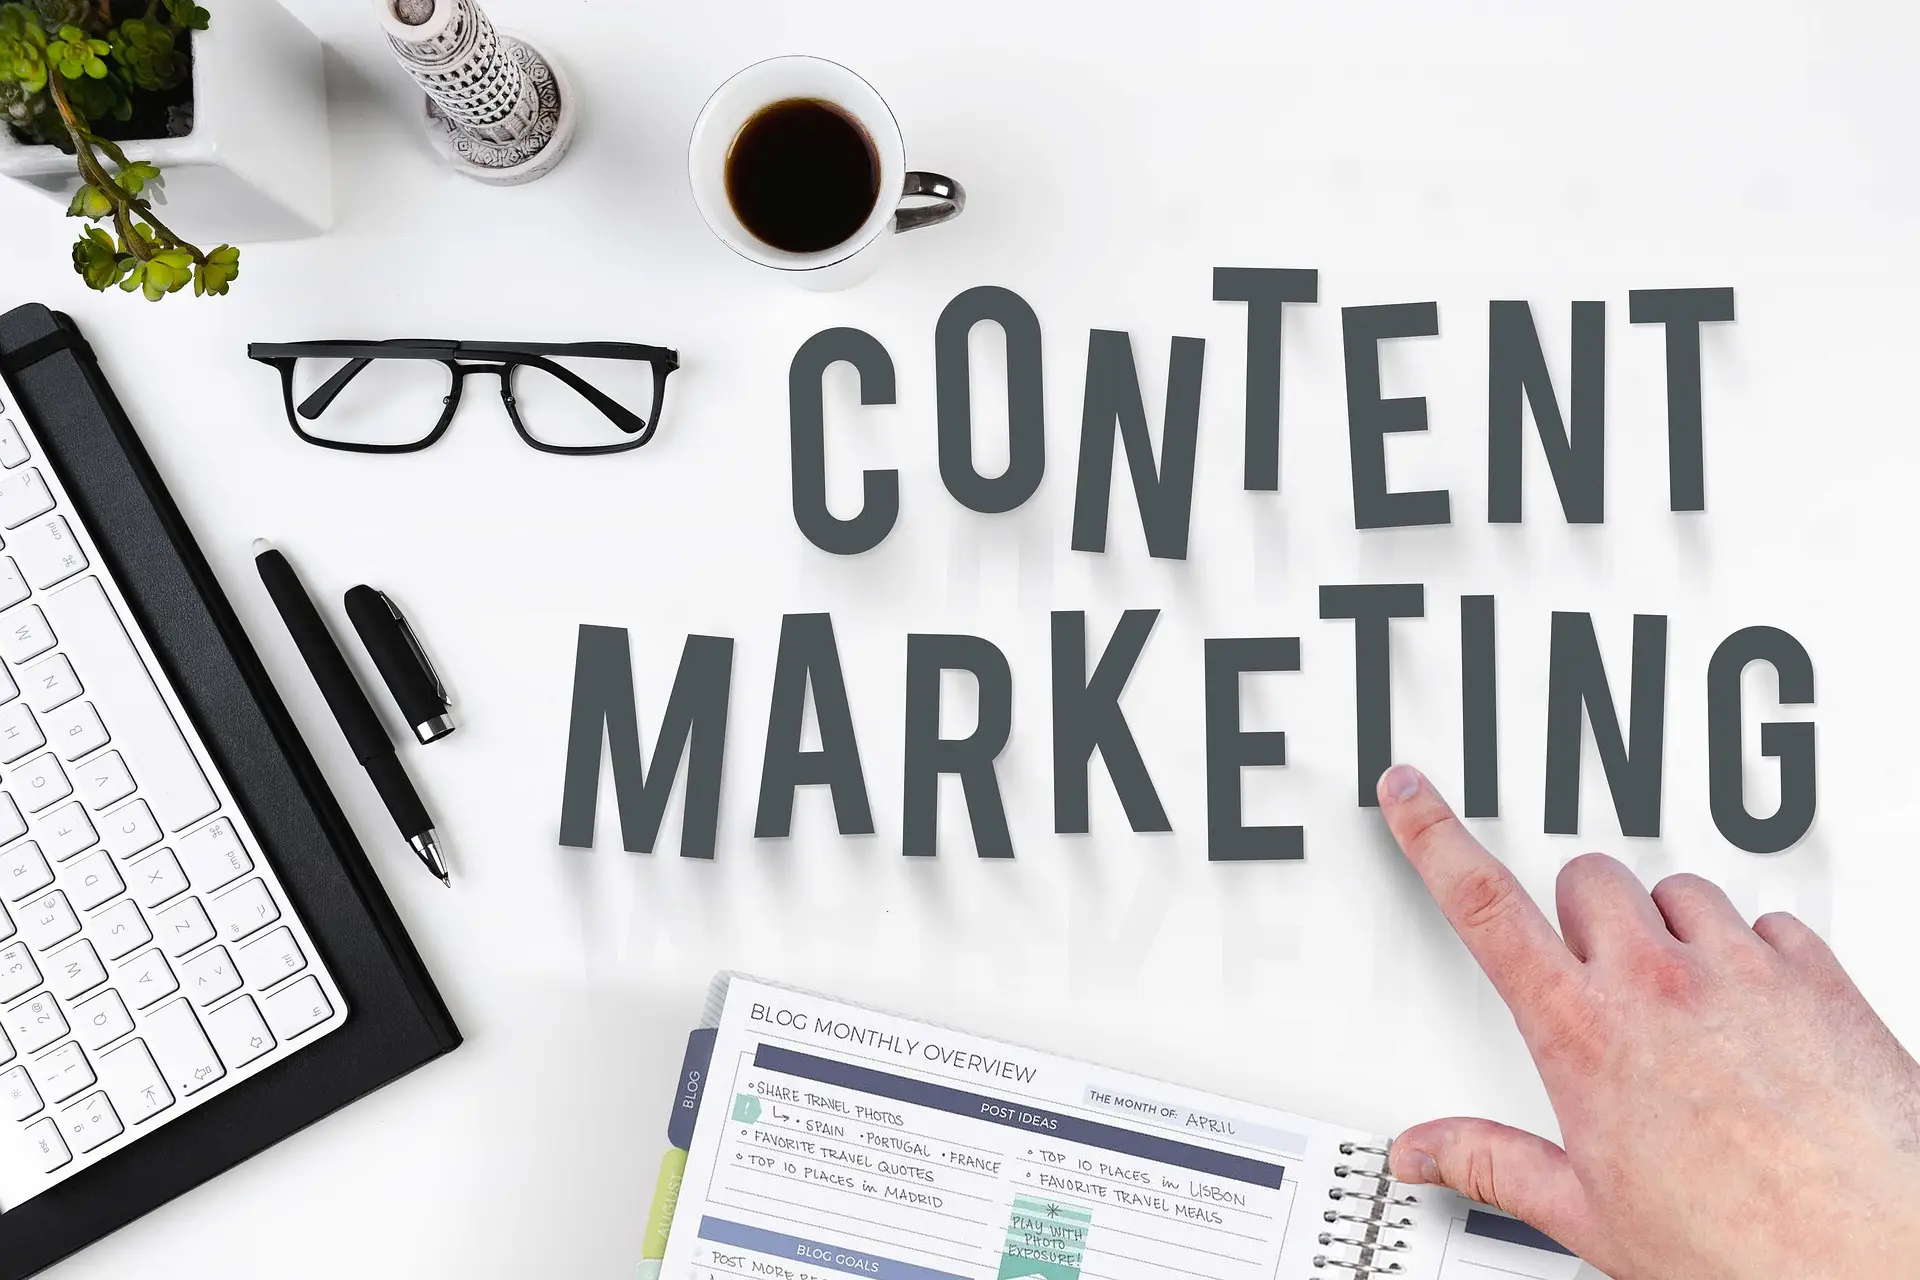 B2B Content Marketing Tips